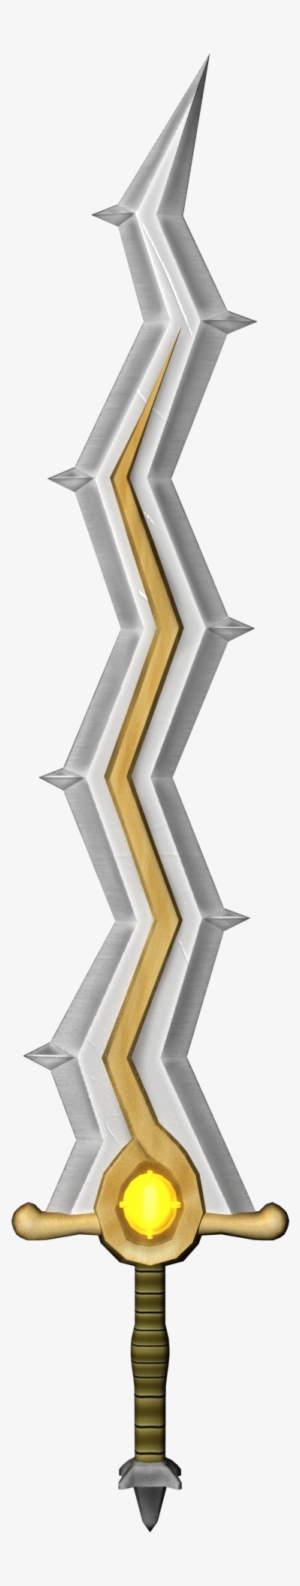 Levin Sword Render By Satoshikura - Fire Emblem Robin Levin Sword